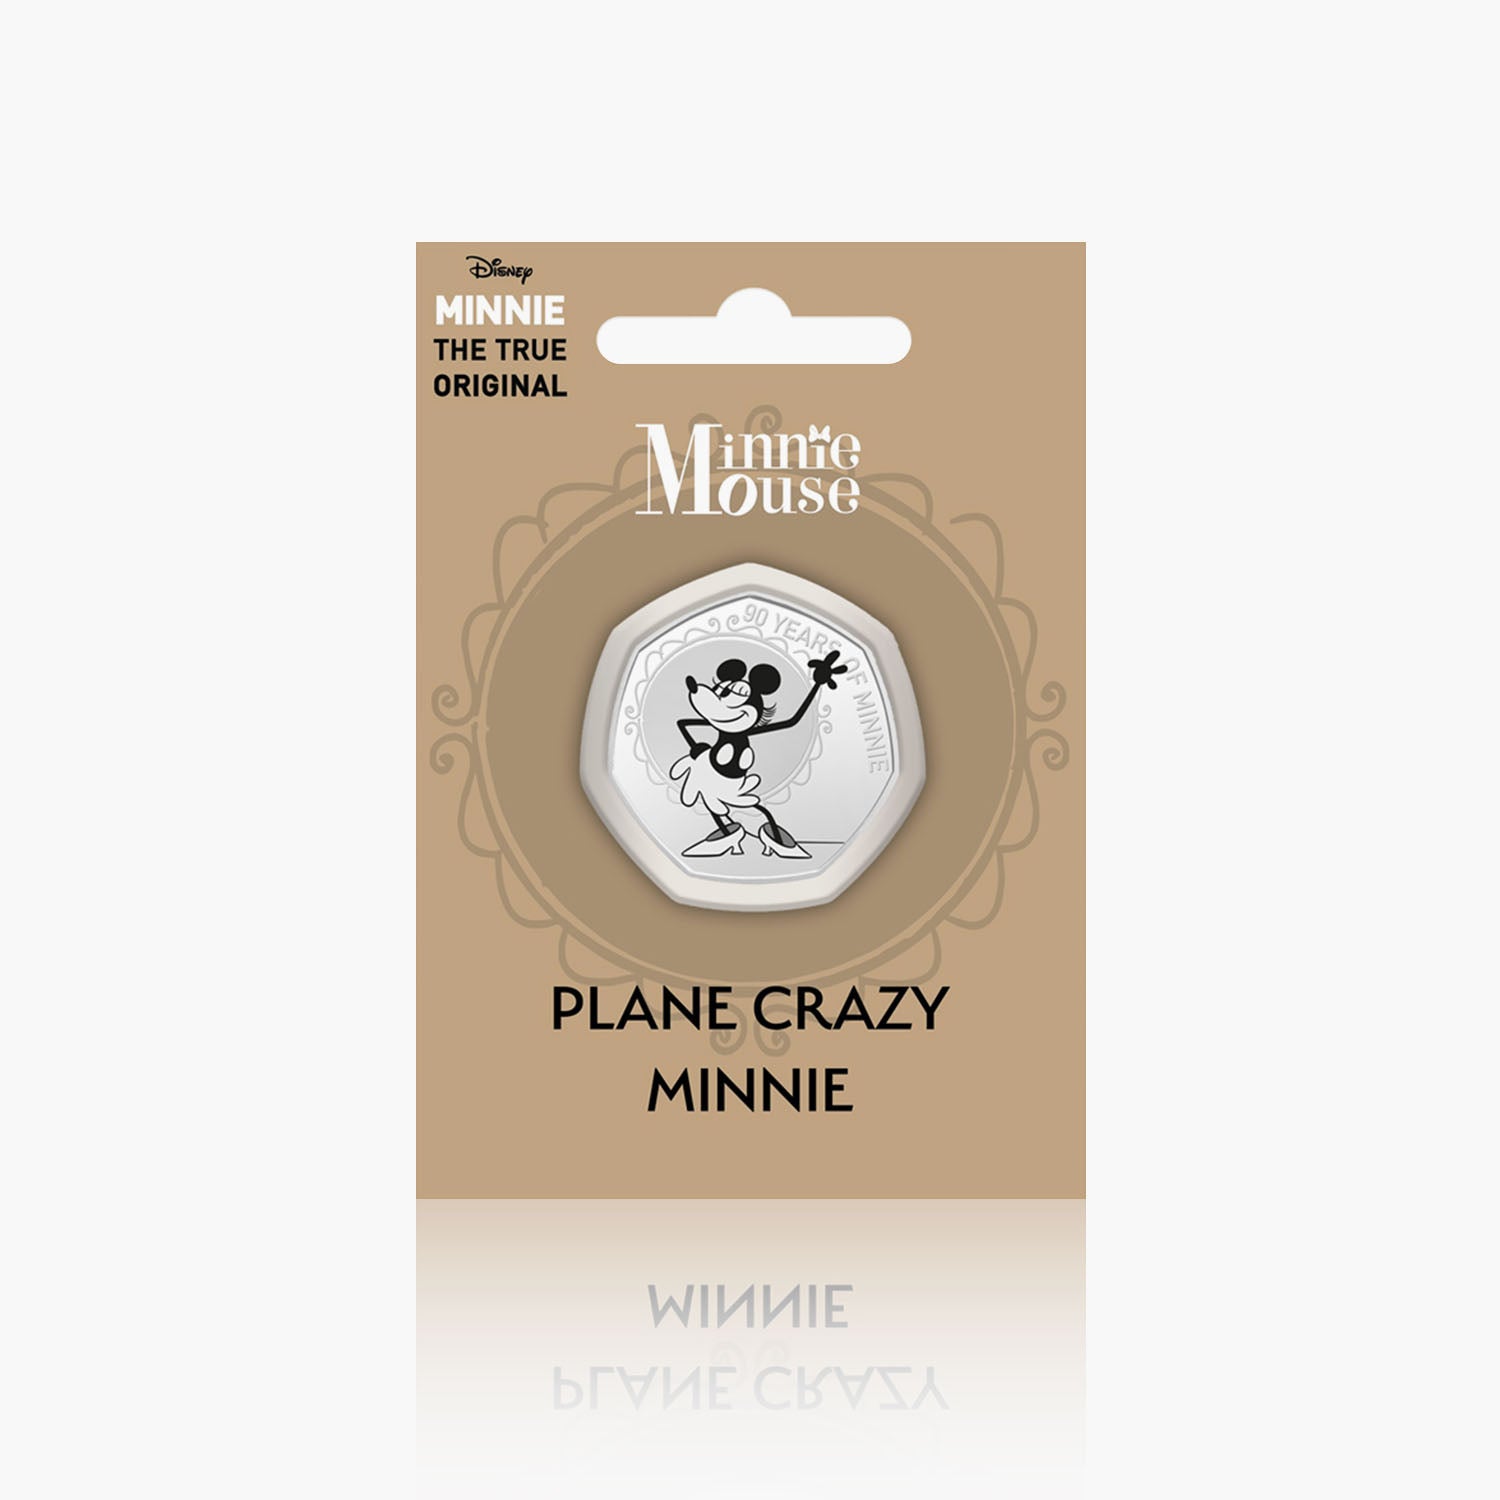 Plane Crazy Minnie Silver-Plated Commemorative